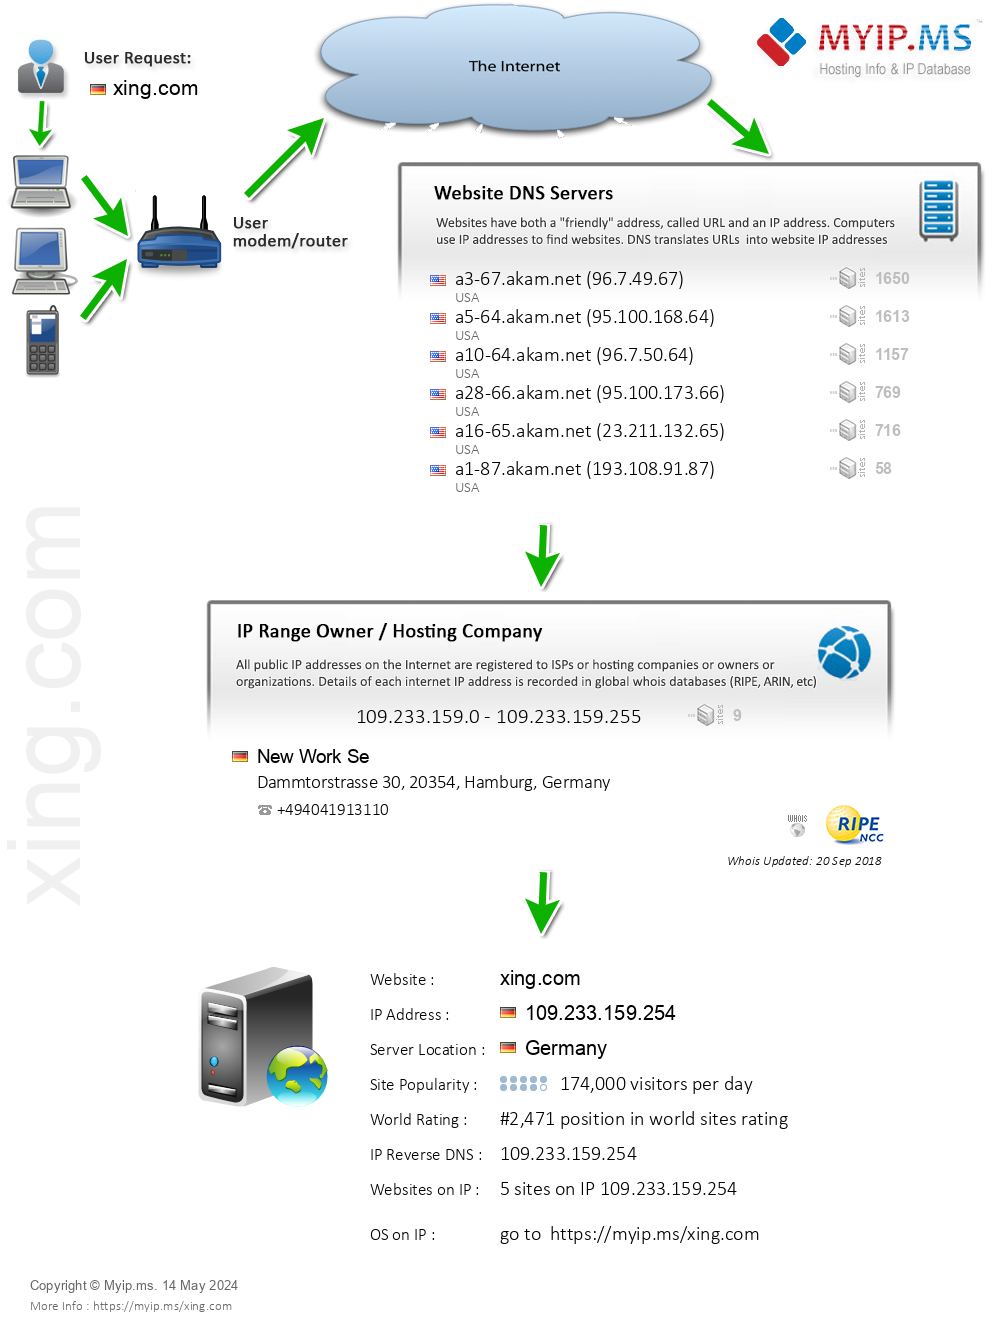 Xing.com - Website Hosting Visual IP Diagram